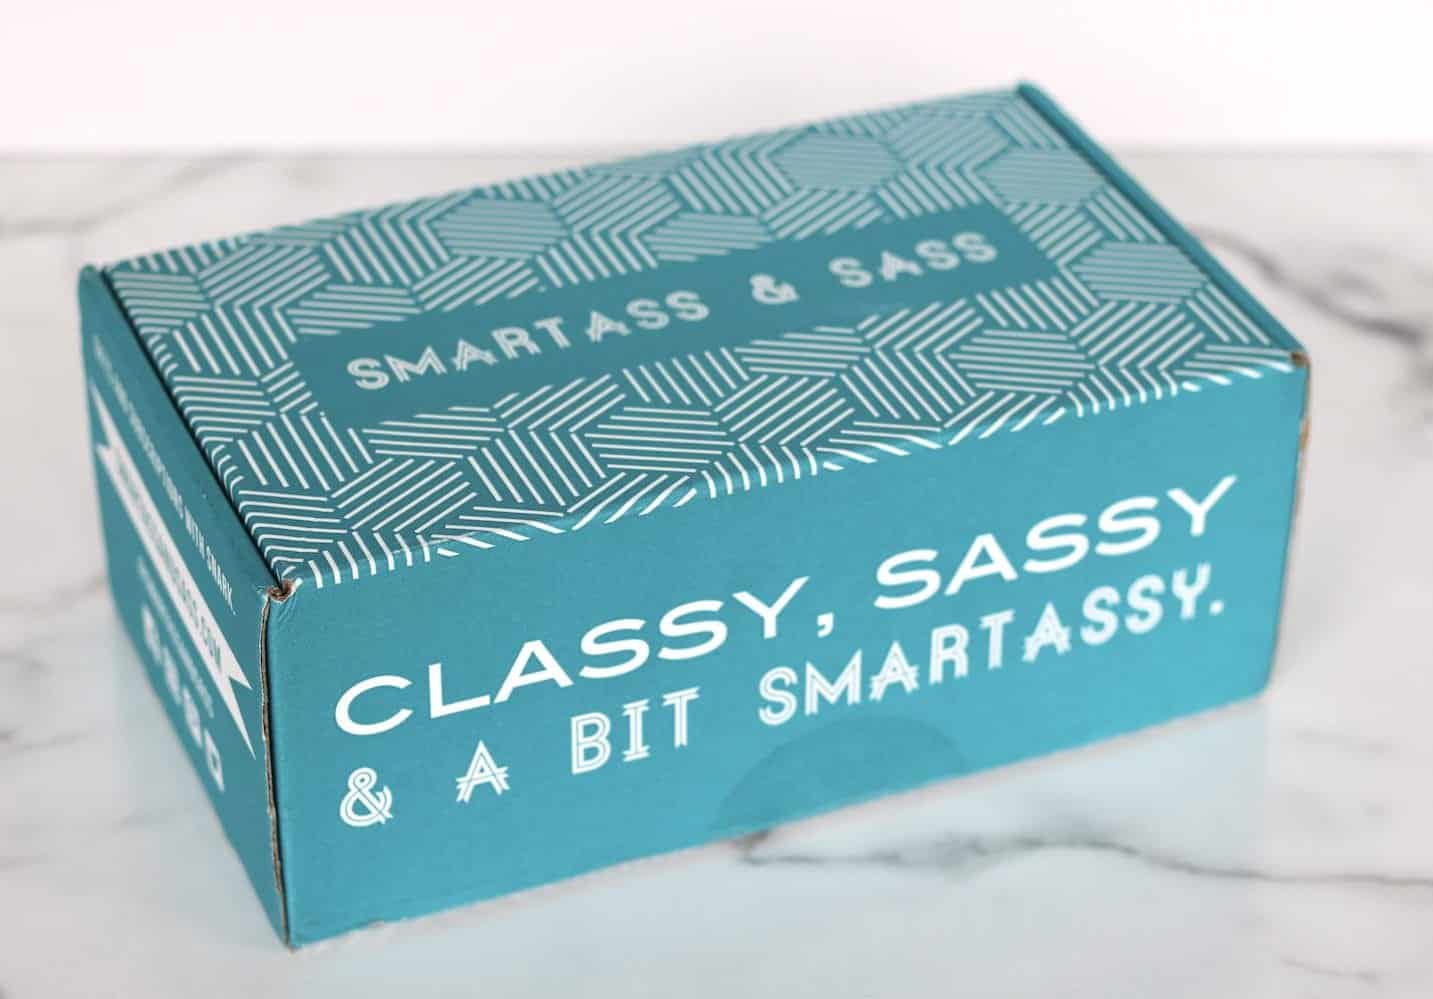 Smartass and Sass custom printed mailer boxes with slogan logo brand